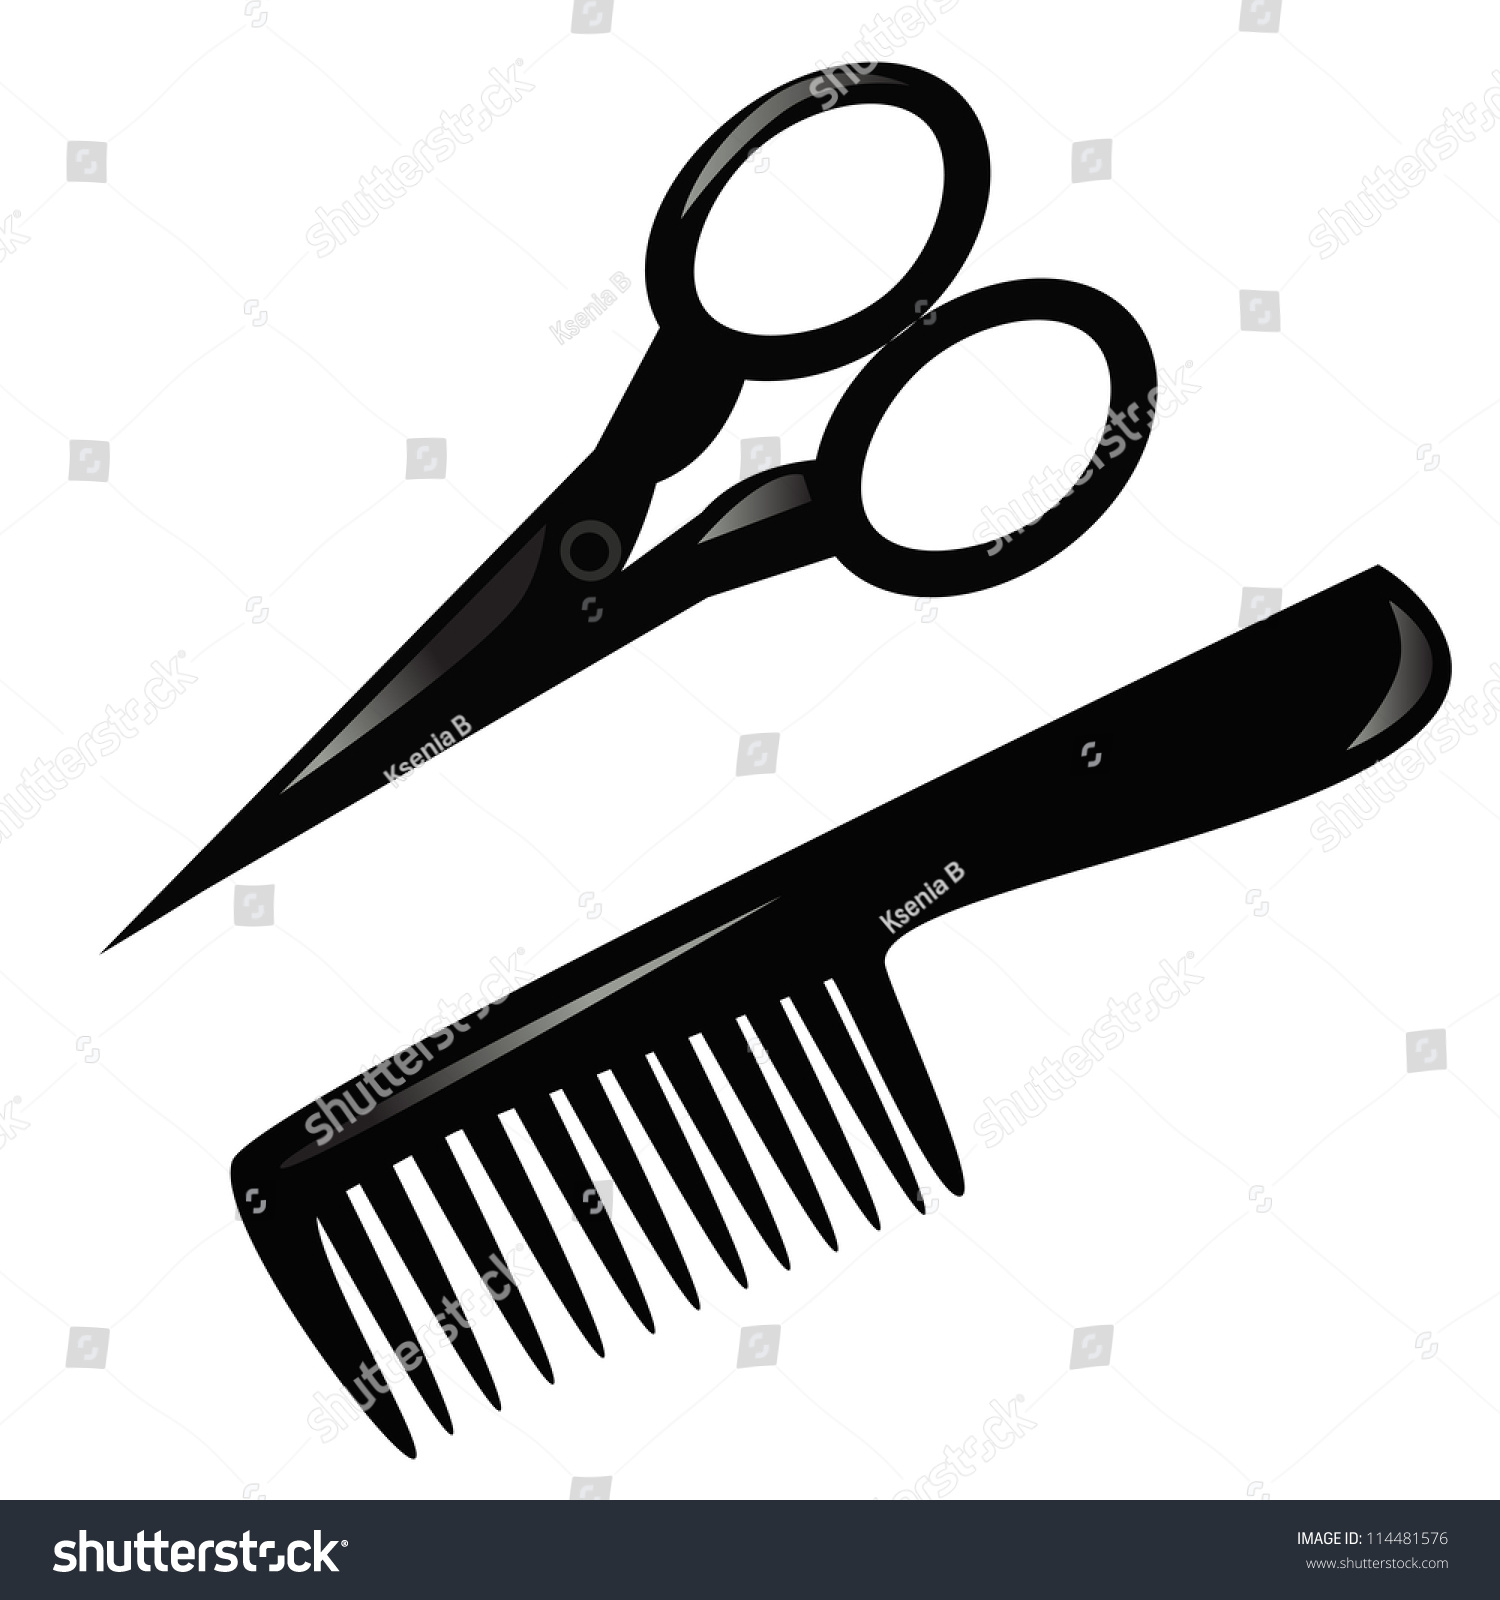 Scissors And Comb Stock Vector Illustration 114481576 : Shutterstock